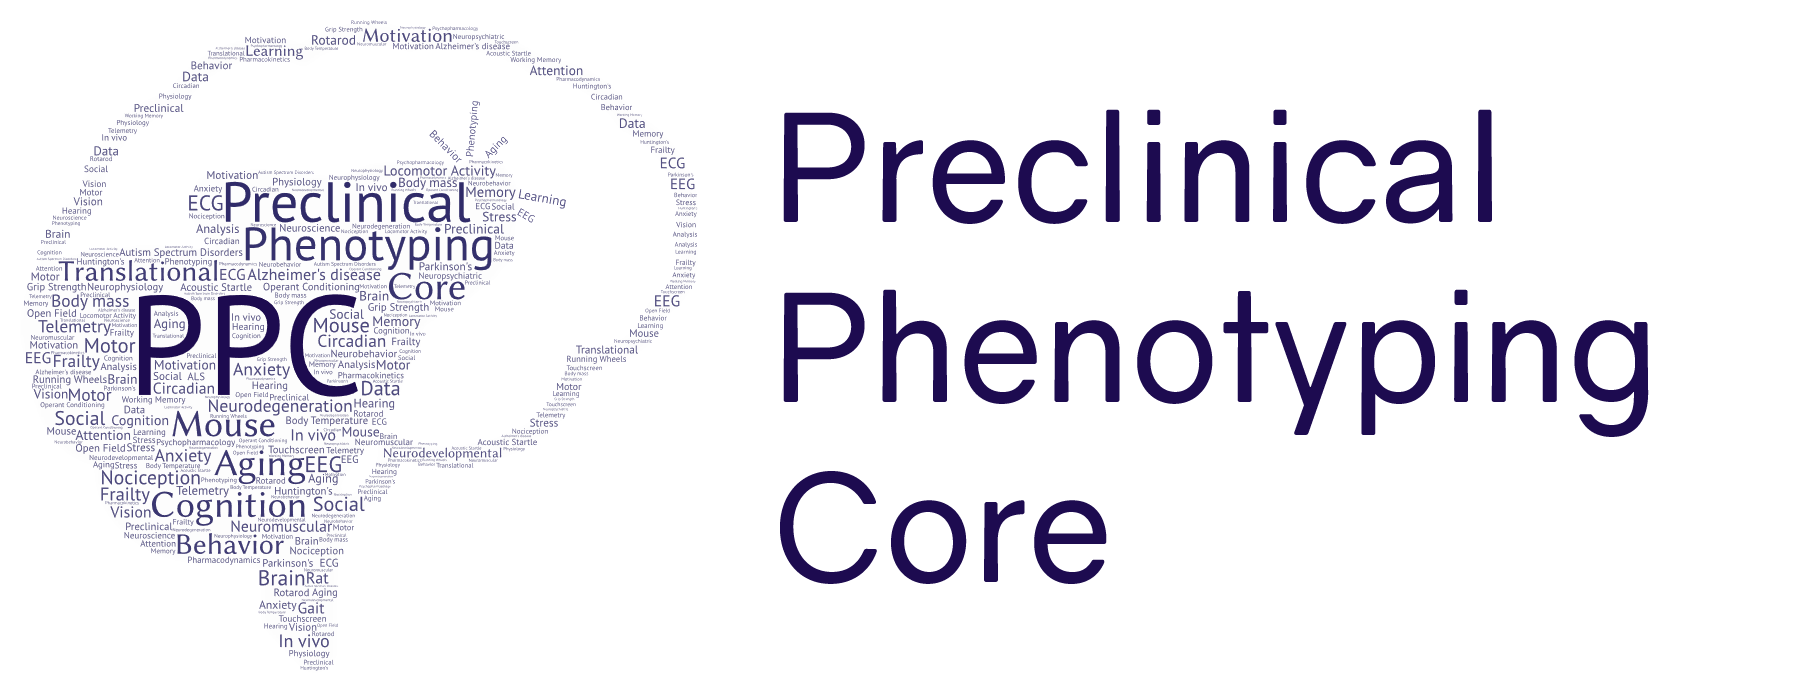 Preclinical Phenotyping Core